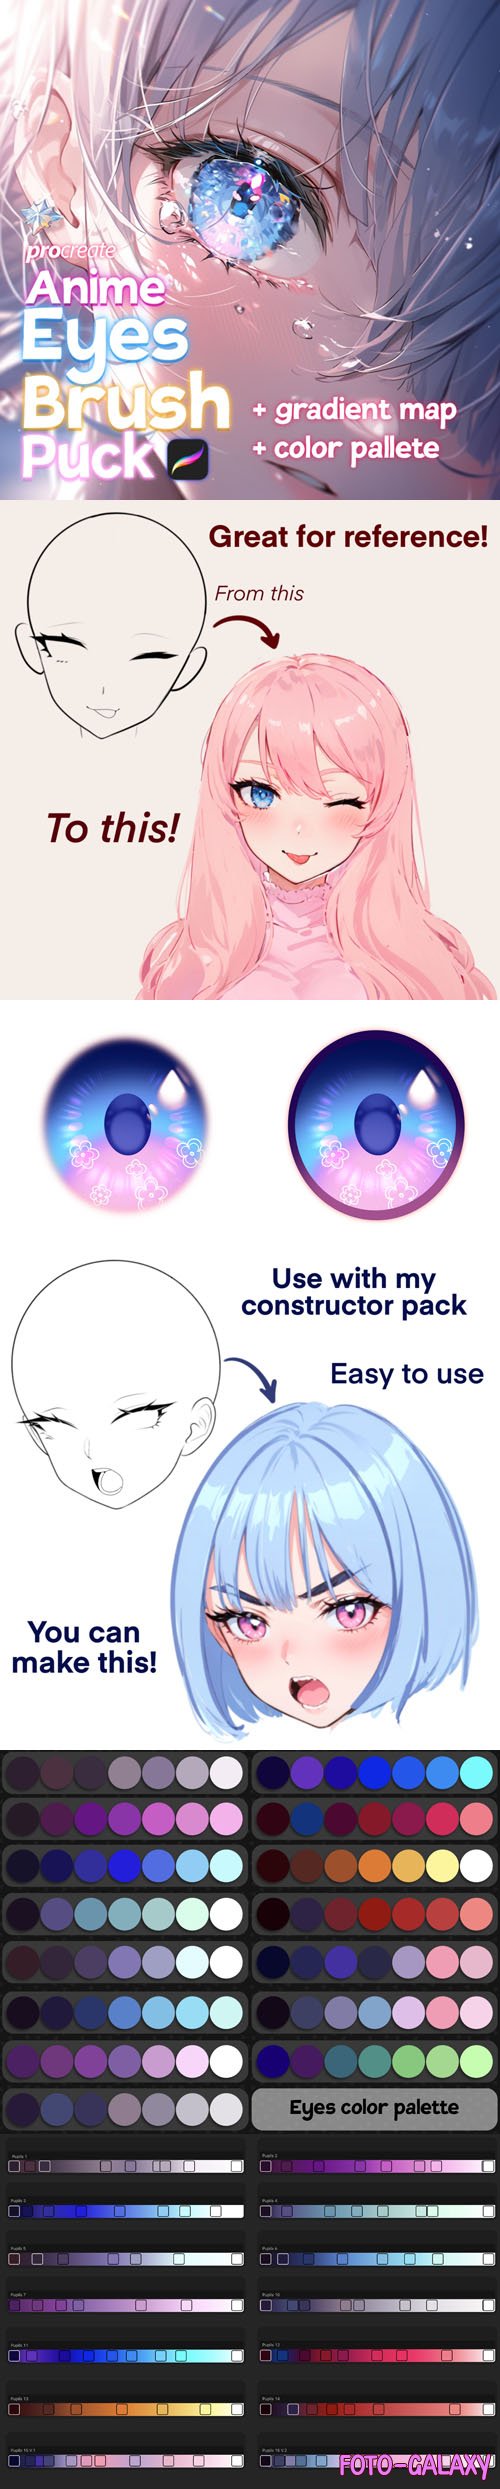 Anime Eyes Brushes Pack for Procreate